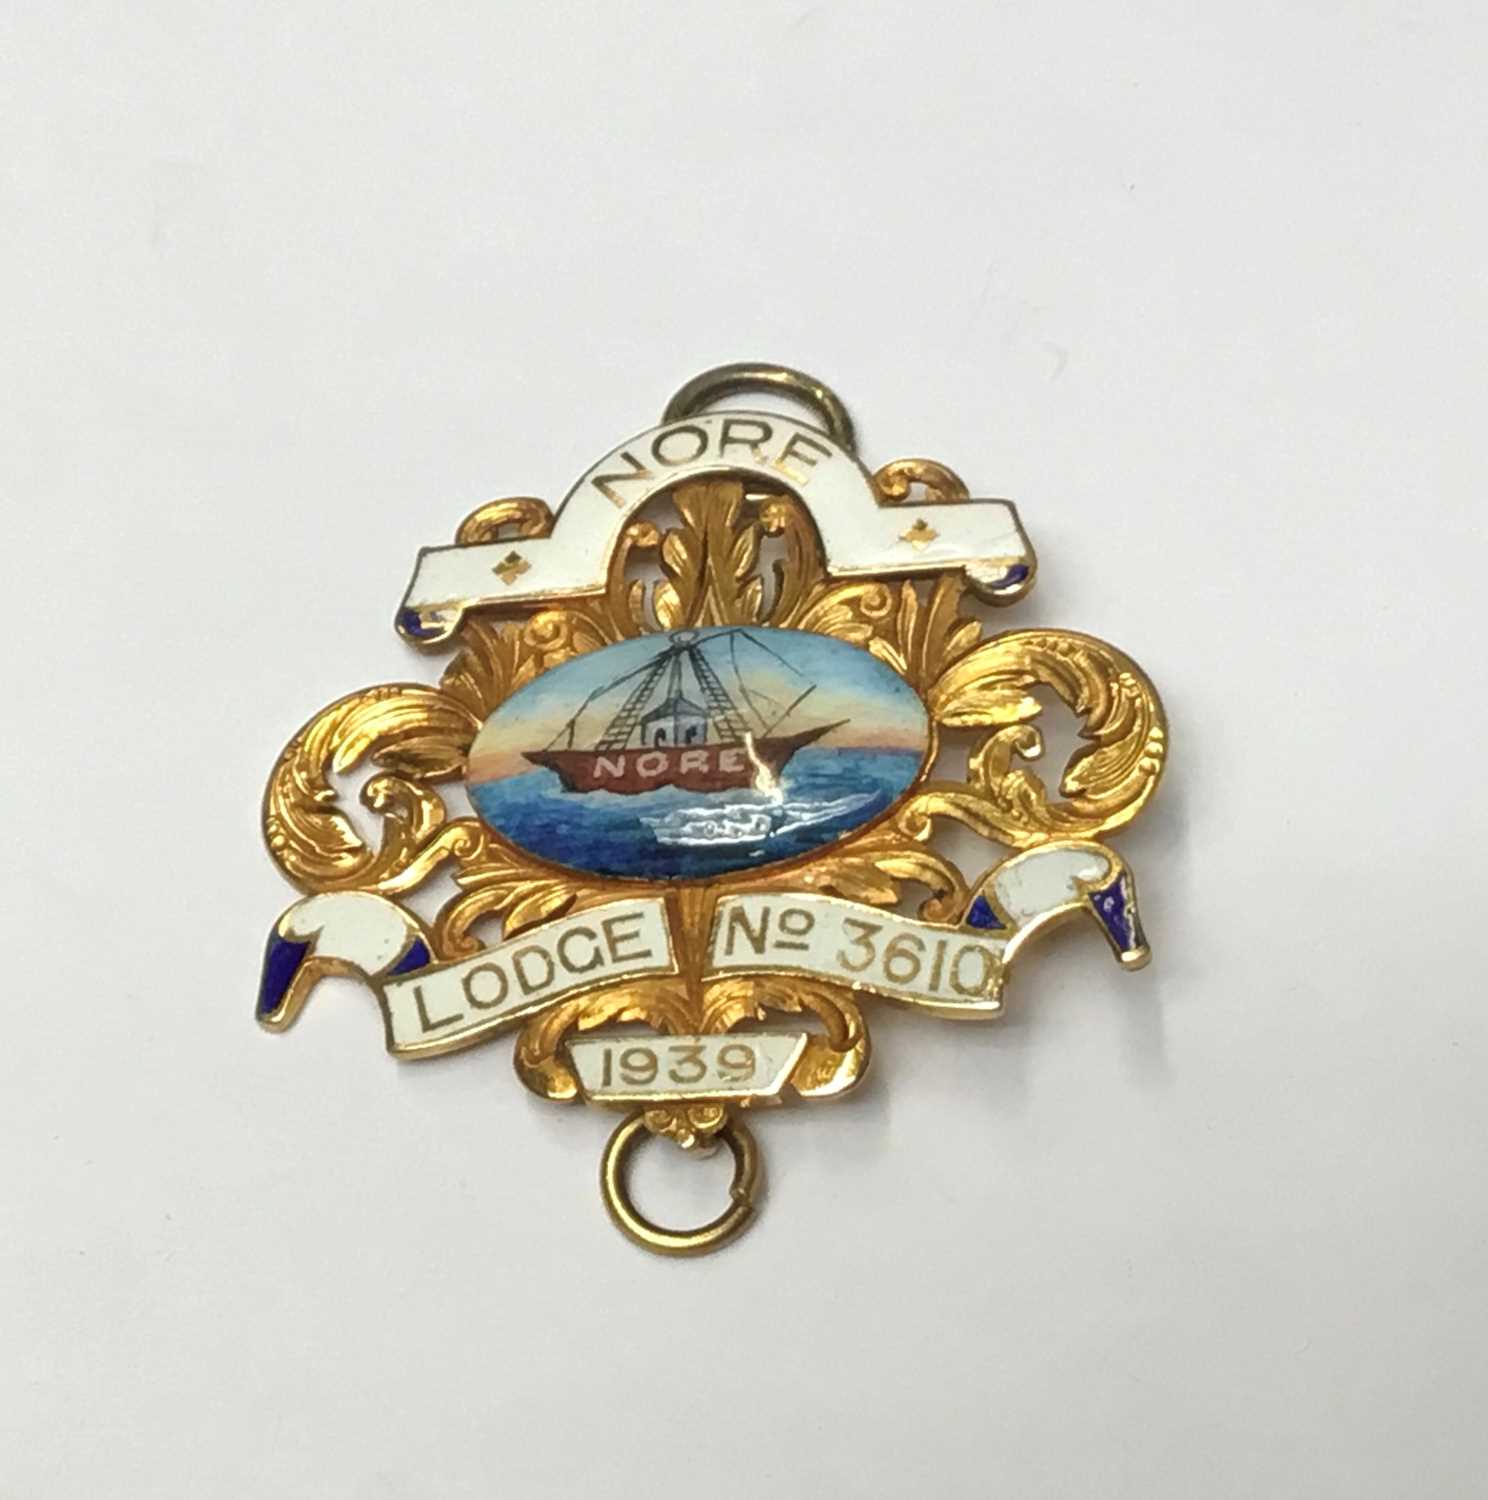 Lot 190 - Good quality yellow metal and enamel Masonic Jewel, Nore Lodge No. 3610, 1939.